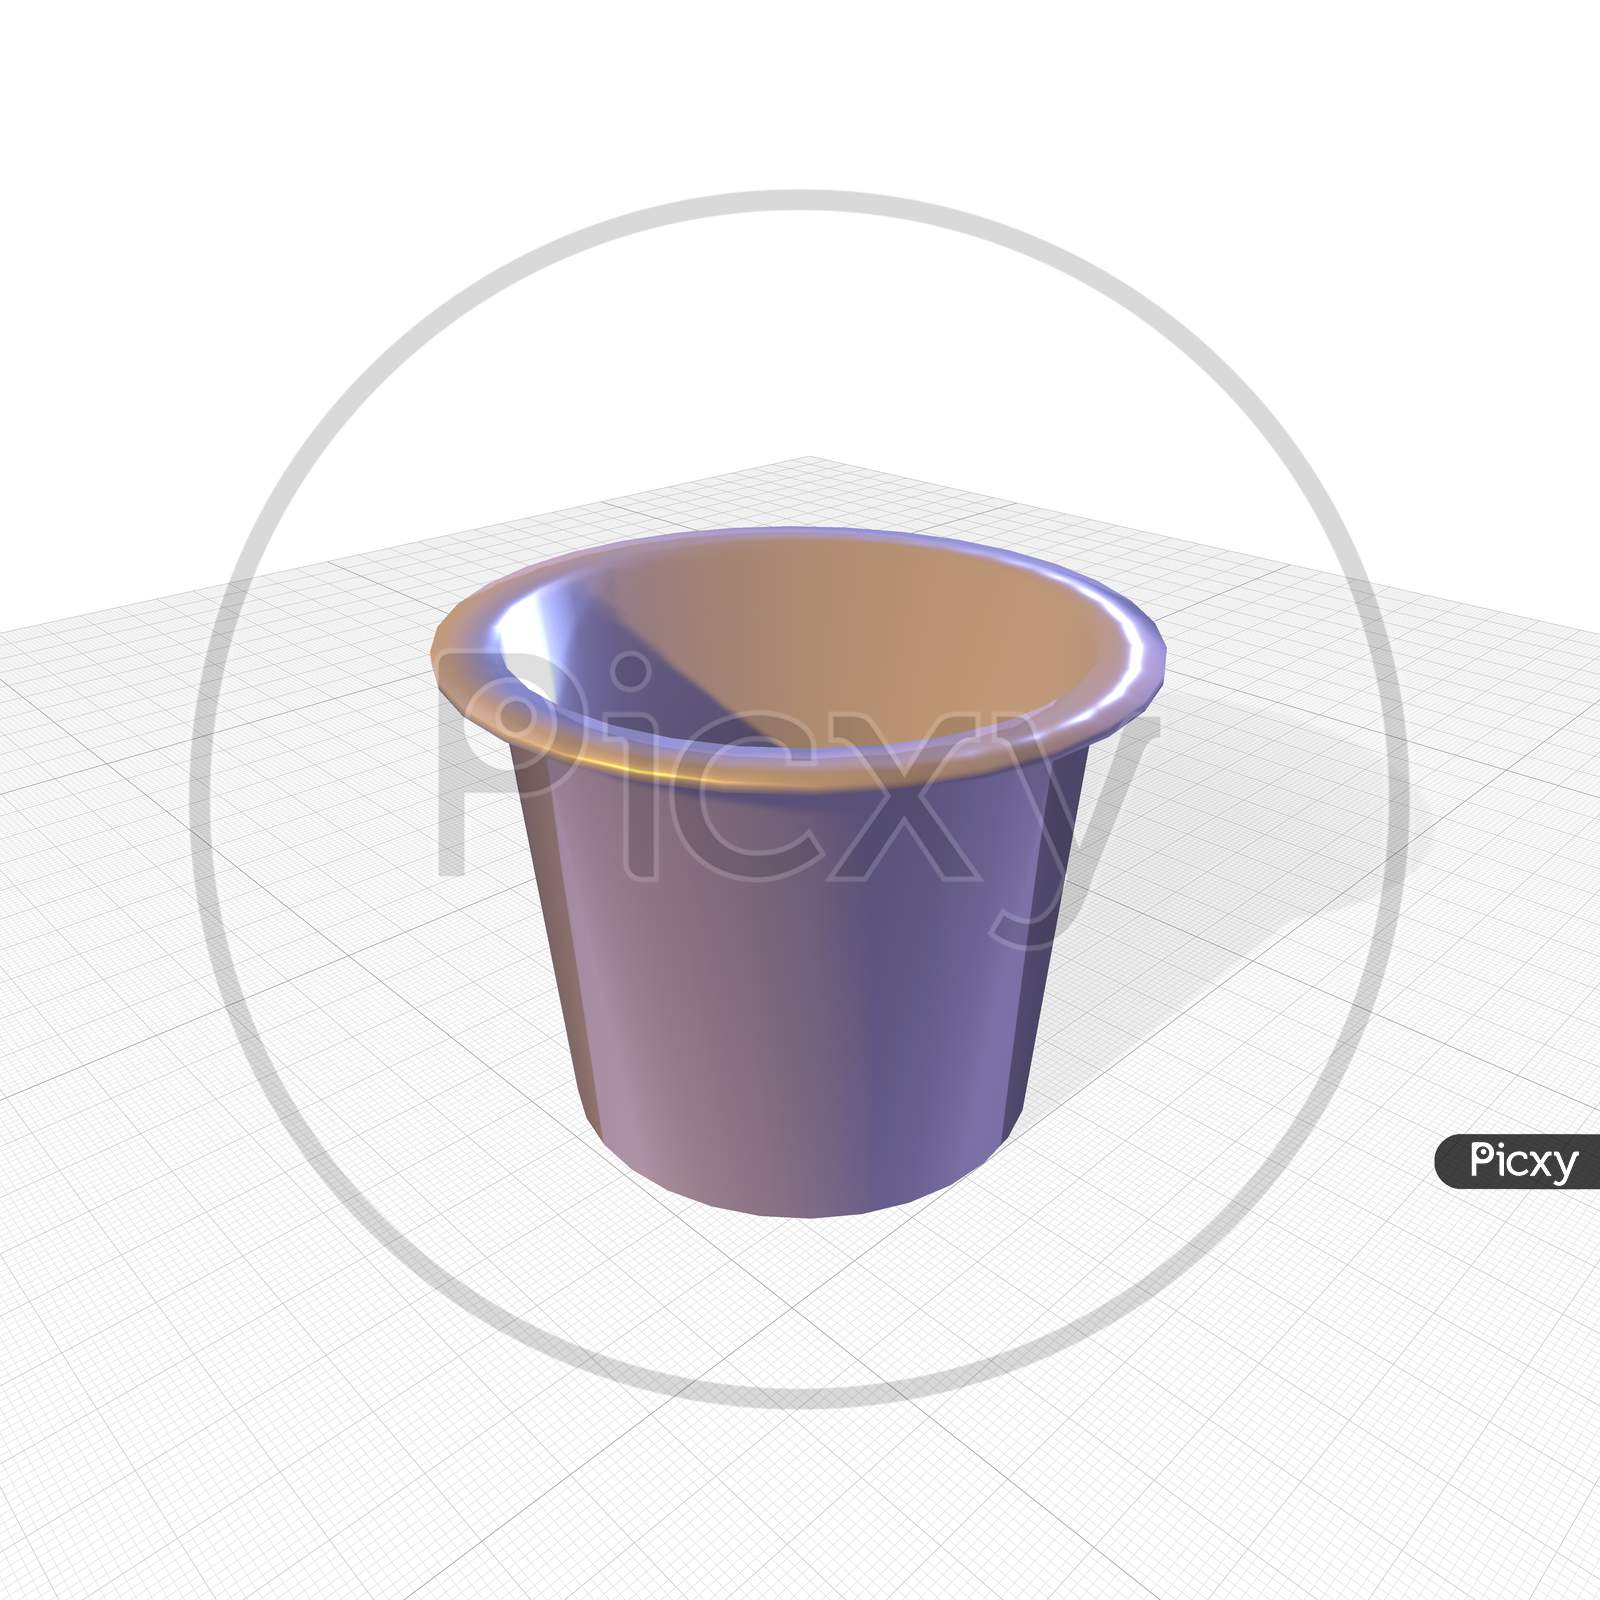 Three Dimensional Illustration Image Of A Bucket